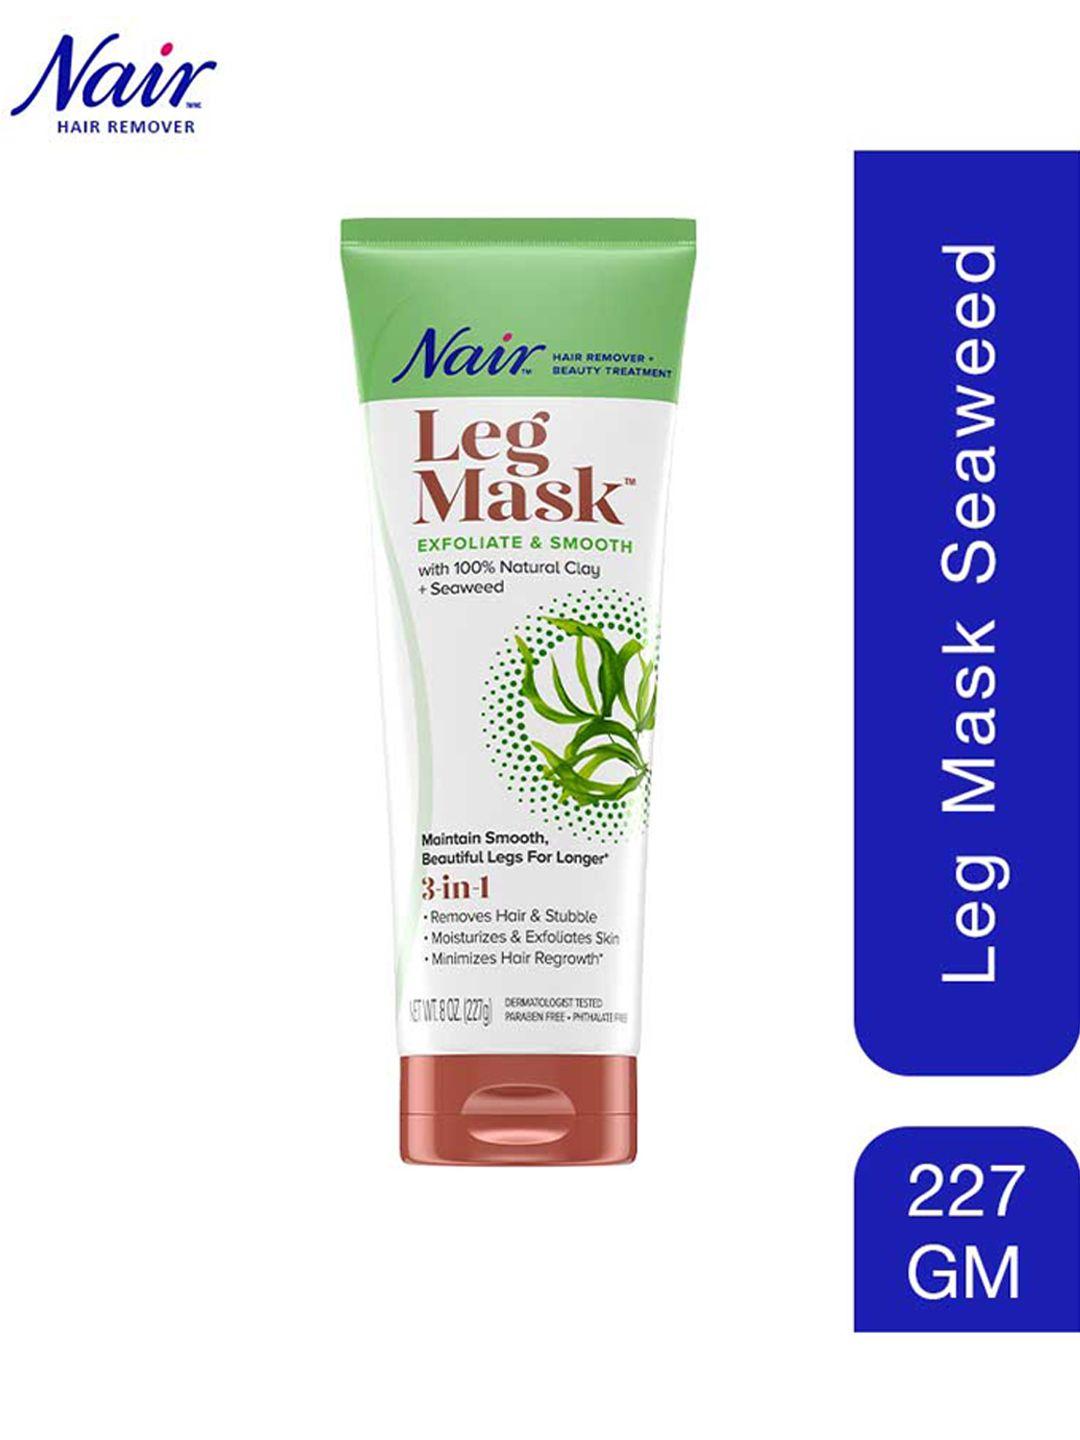 nair exfoliate & smooth leg mask depilatory cream with natural clay & seaweed - 227 g